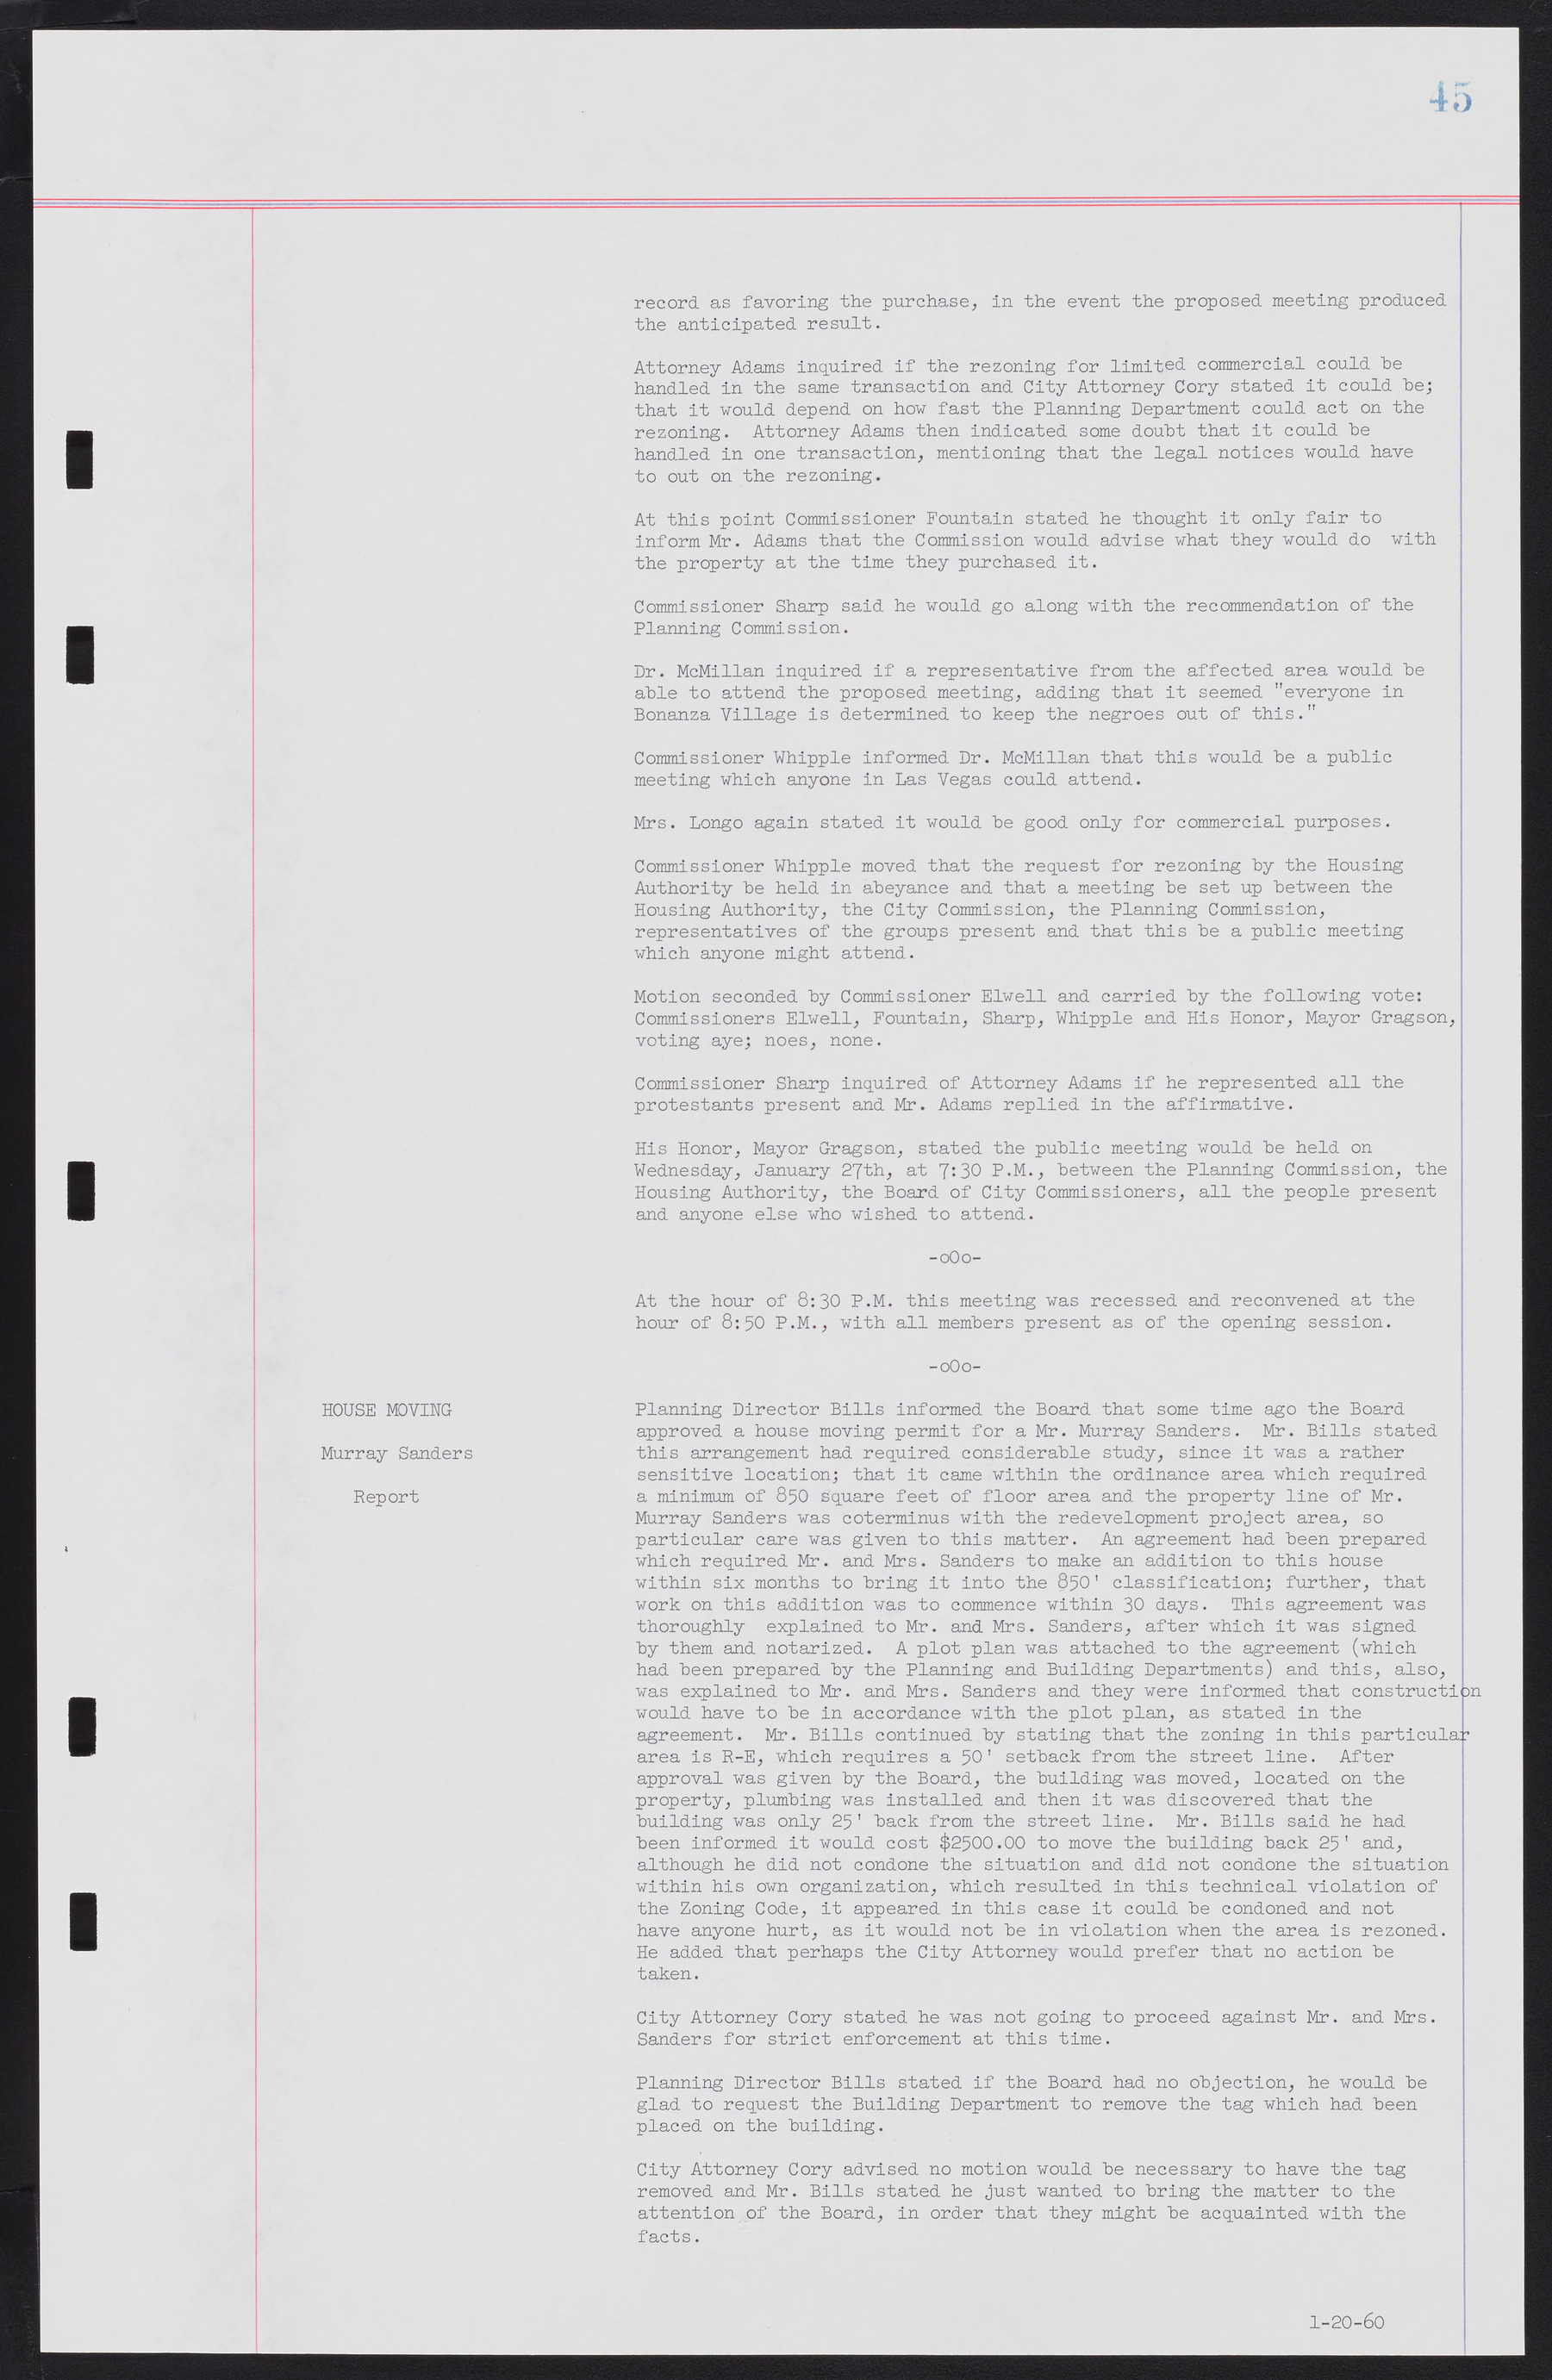 Las Vegas City Commission Minutes, December 8, 1959 to February 17, 1960, lvc000012-49